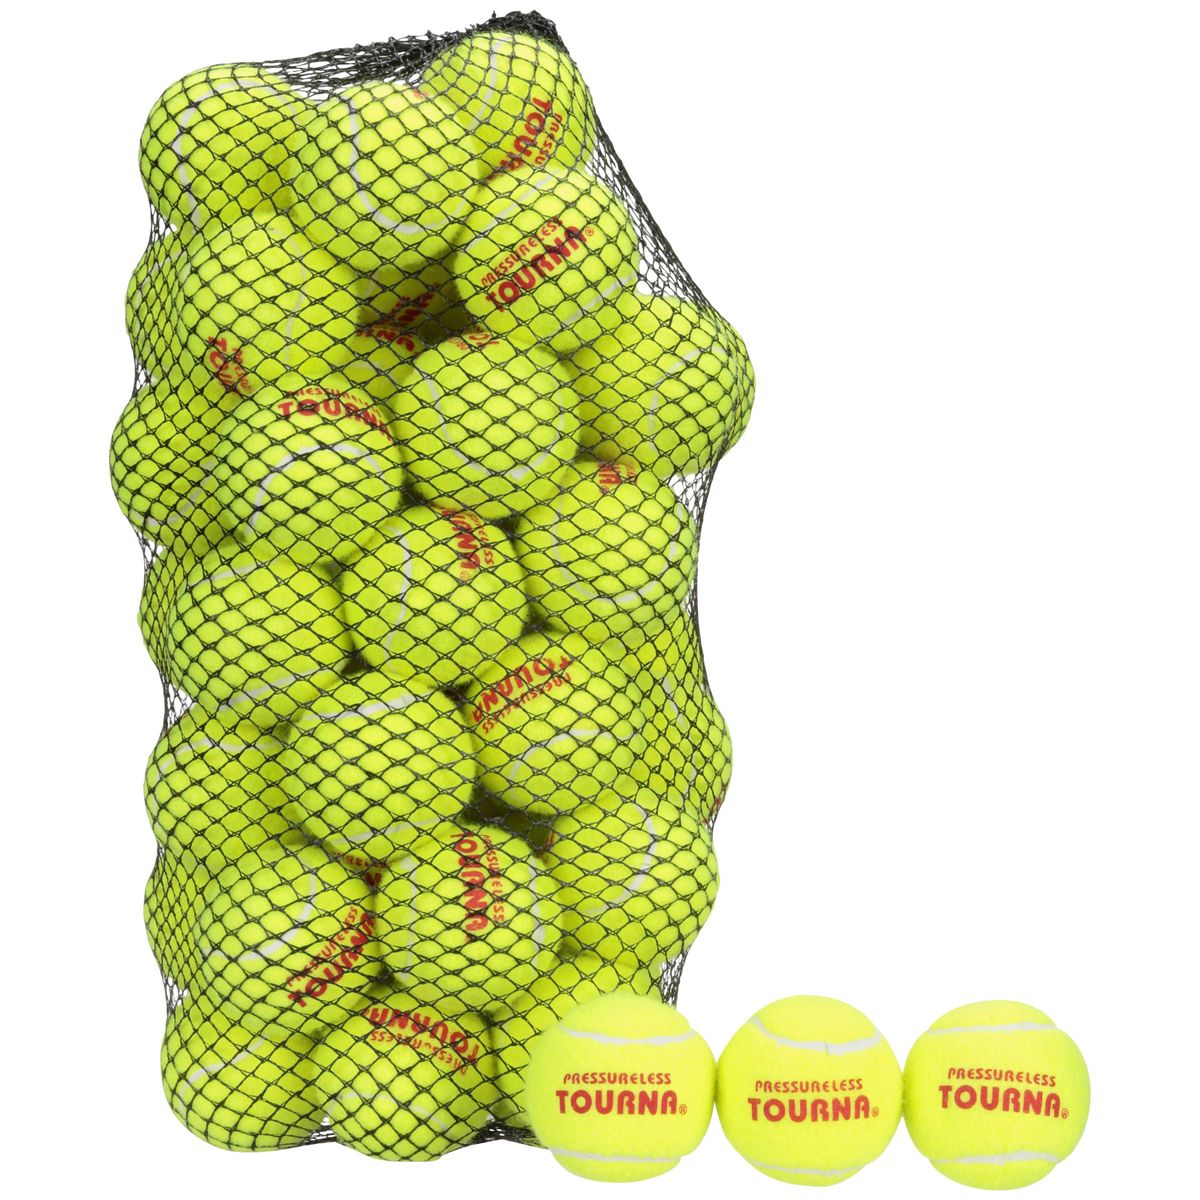 [RDY] [送料無料] Tourna プレッシャーレス・テニスボール 60球入り [楽天海外通販] | Tourna Pressure less Tennis Balls 60 balls